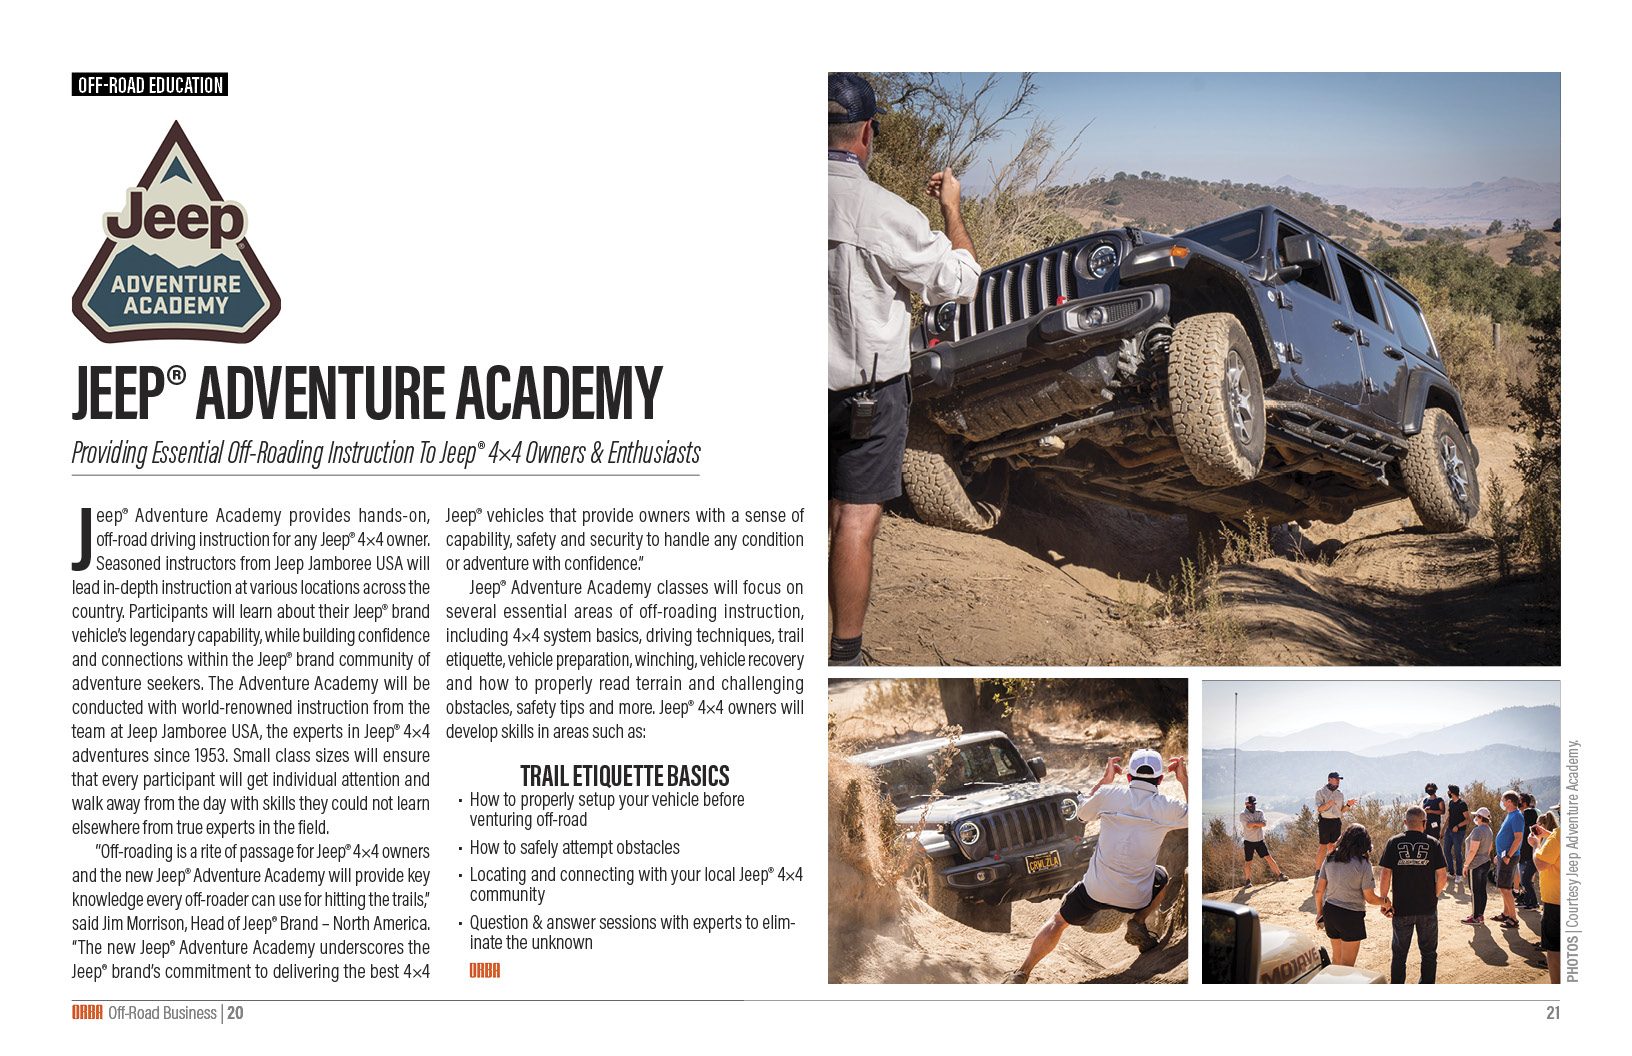 Jeep Adventure Academy